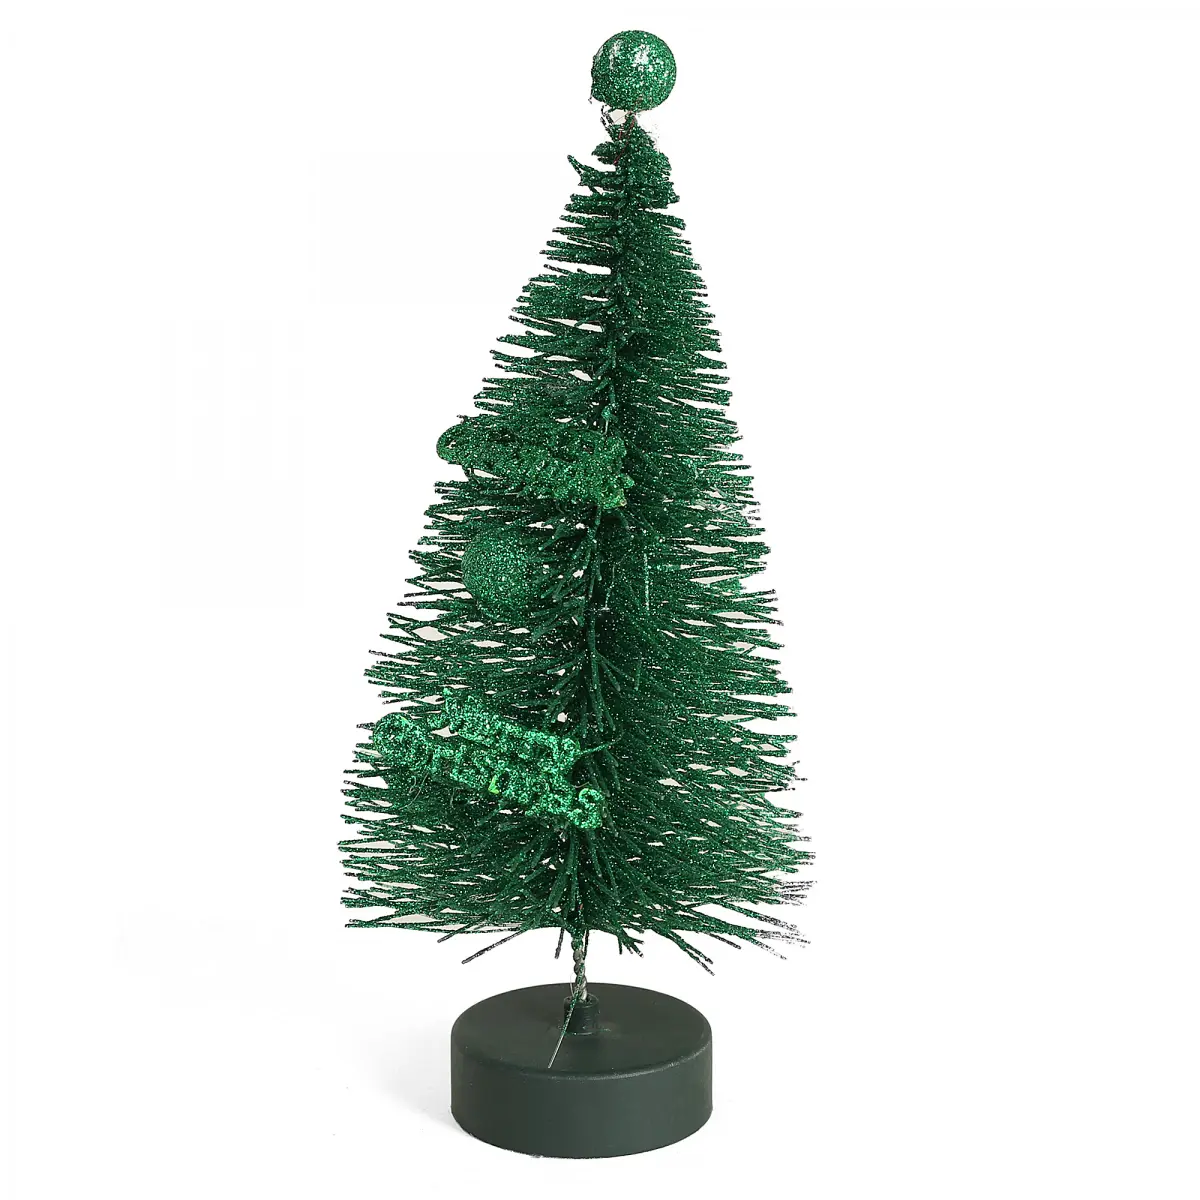 Boing Christmas Tree Decorations, 22cm, Green